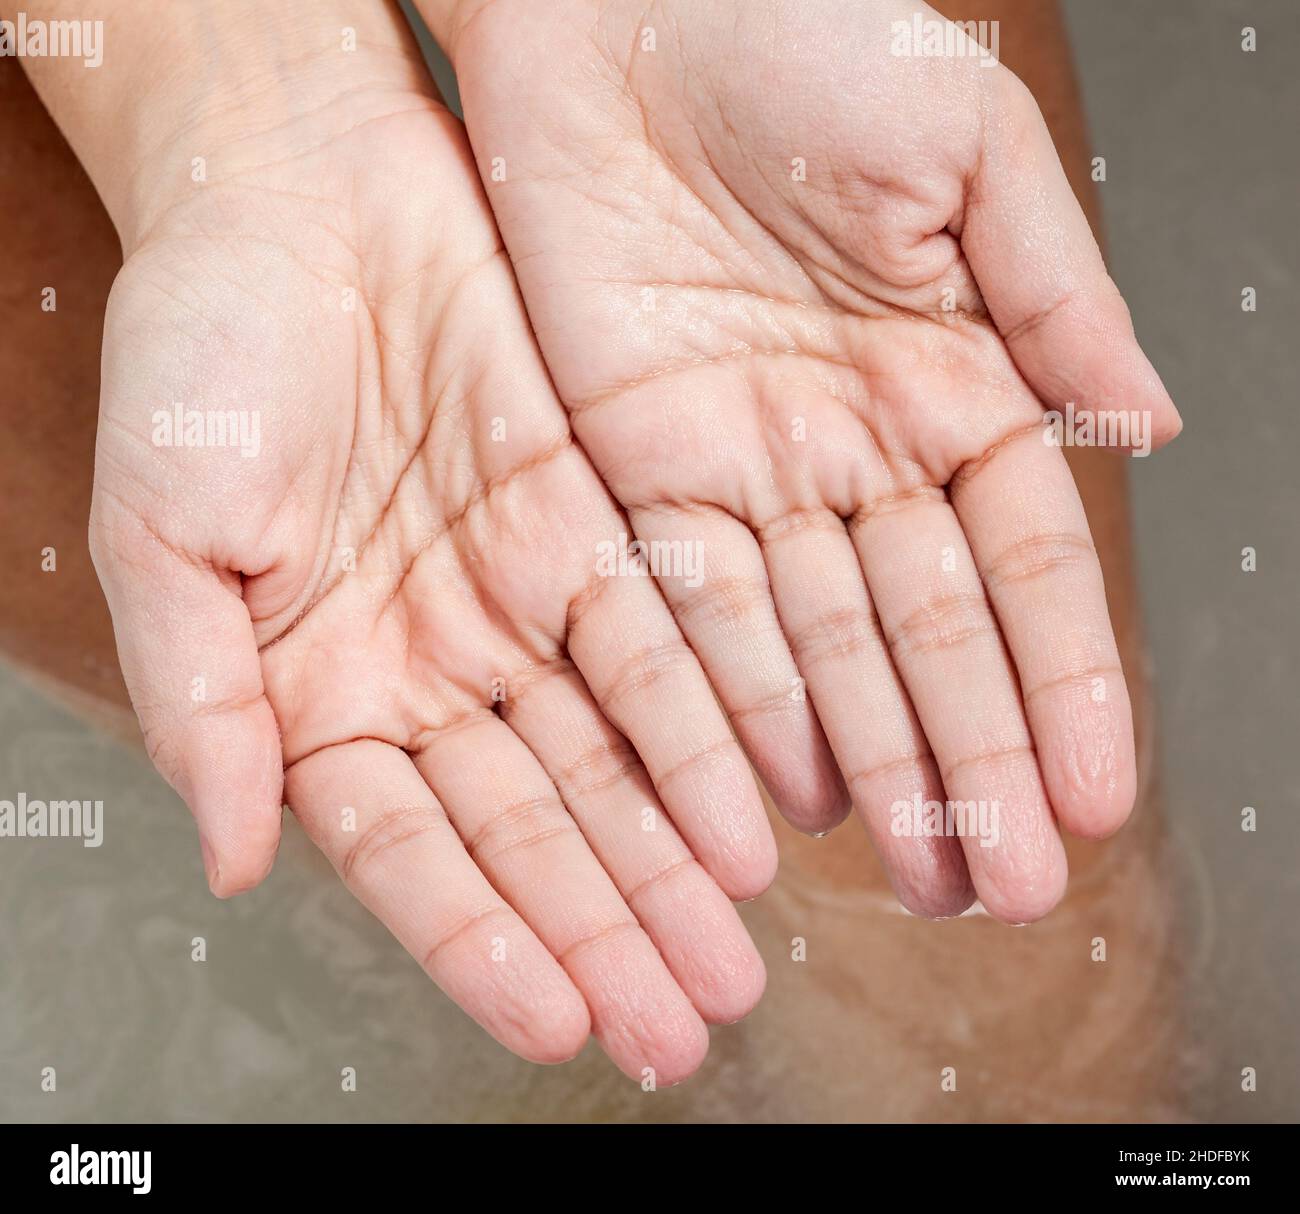 hand, bathwater, dried, dry skin, wizen, hands, bathwaters, drieds, dry skins, wizens Stock Photo